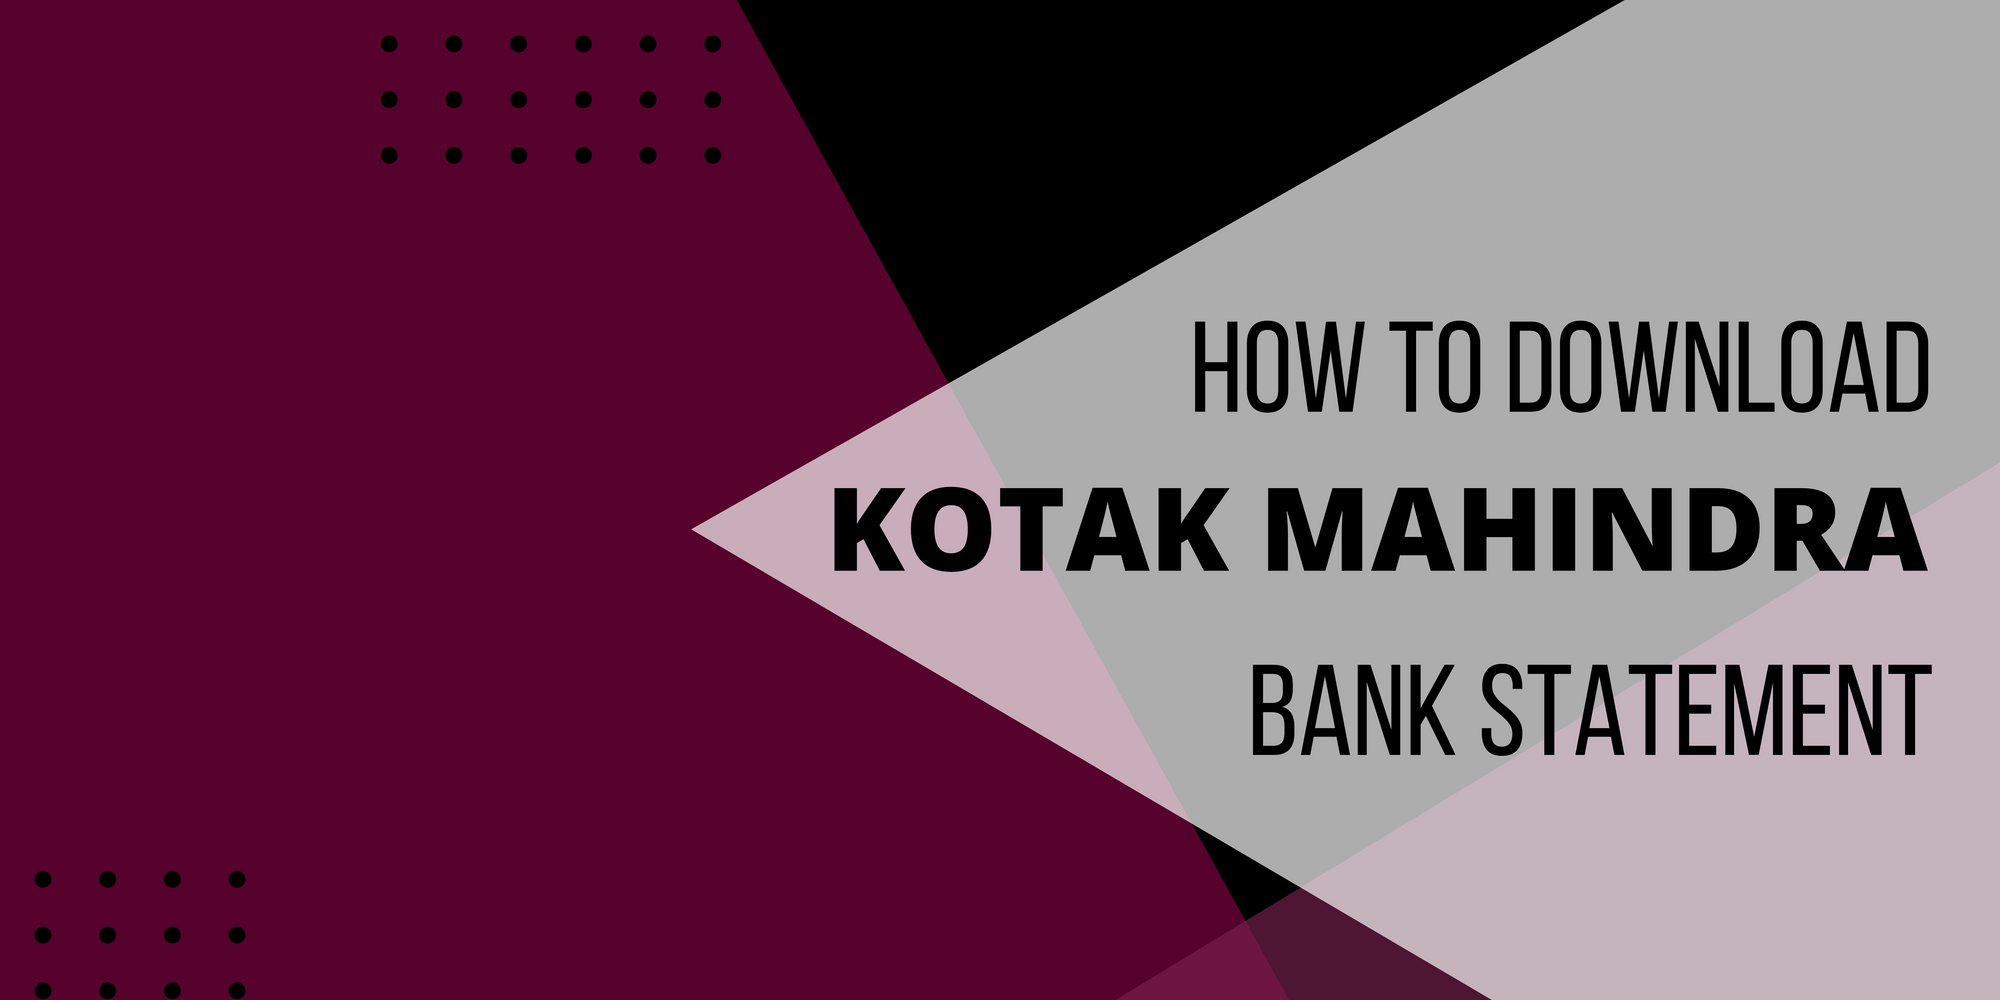 How to download Kotak Mahindra Bank Statement